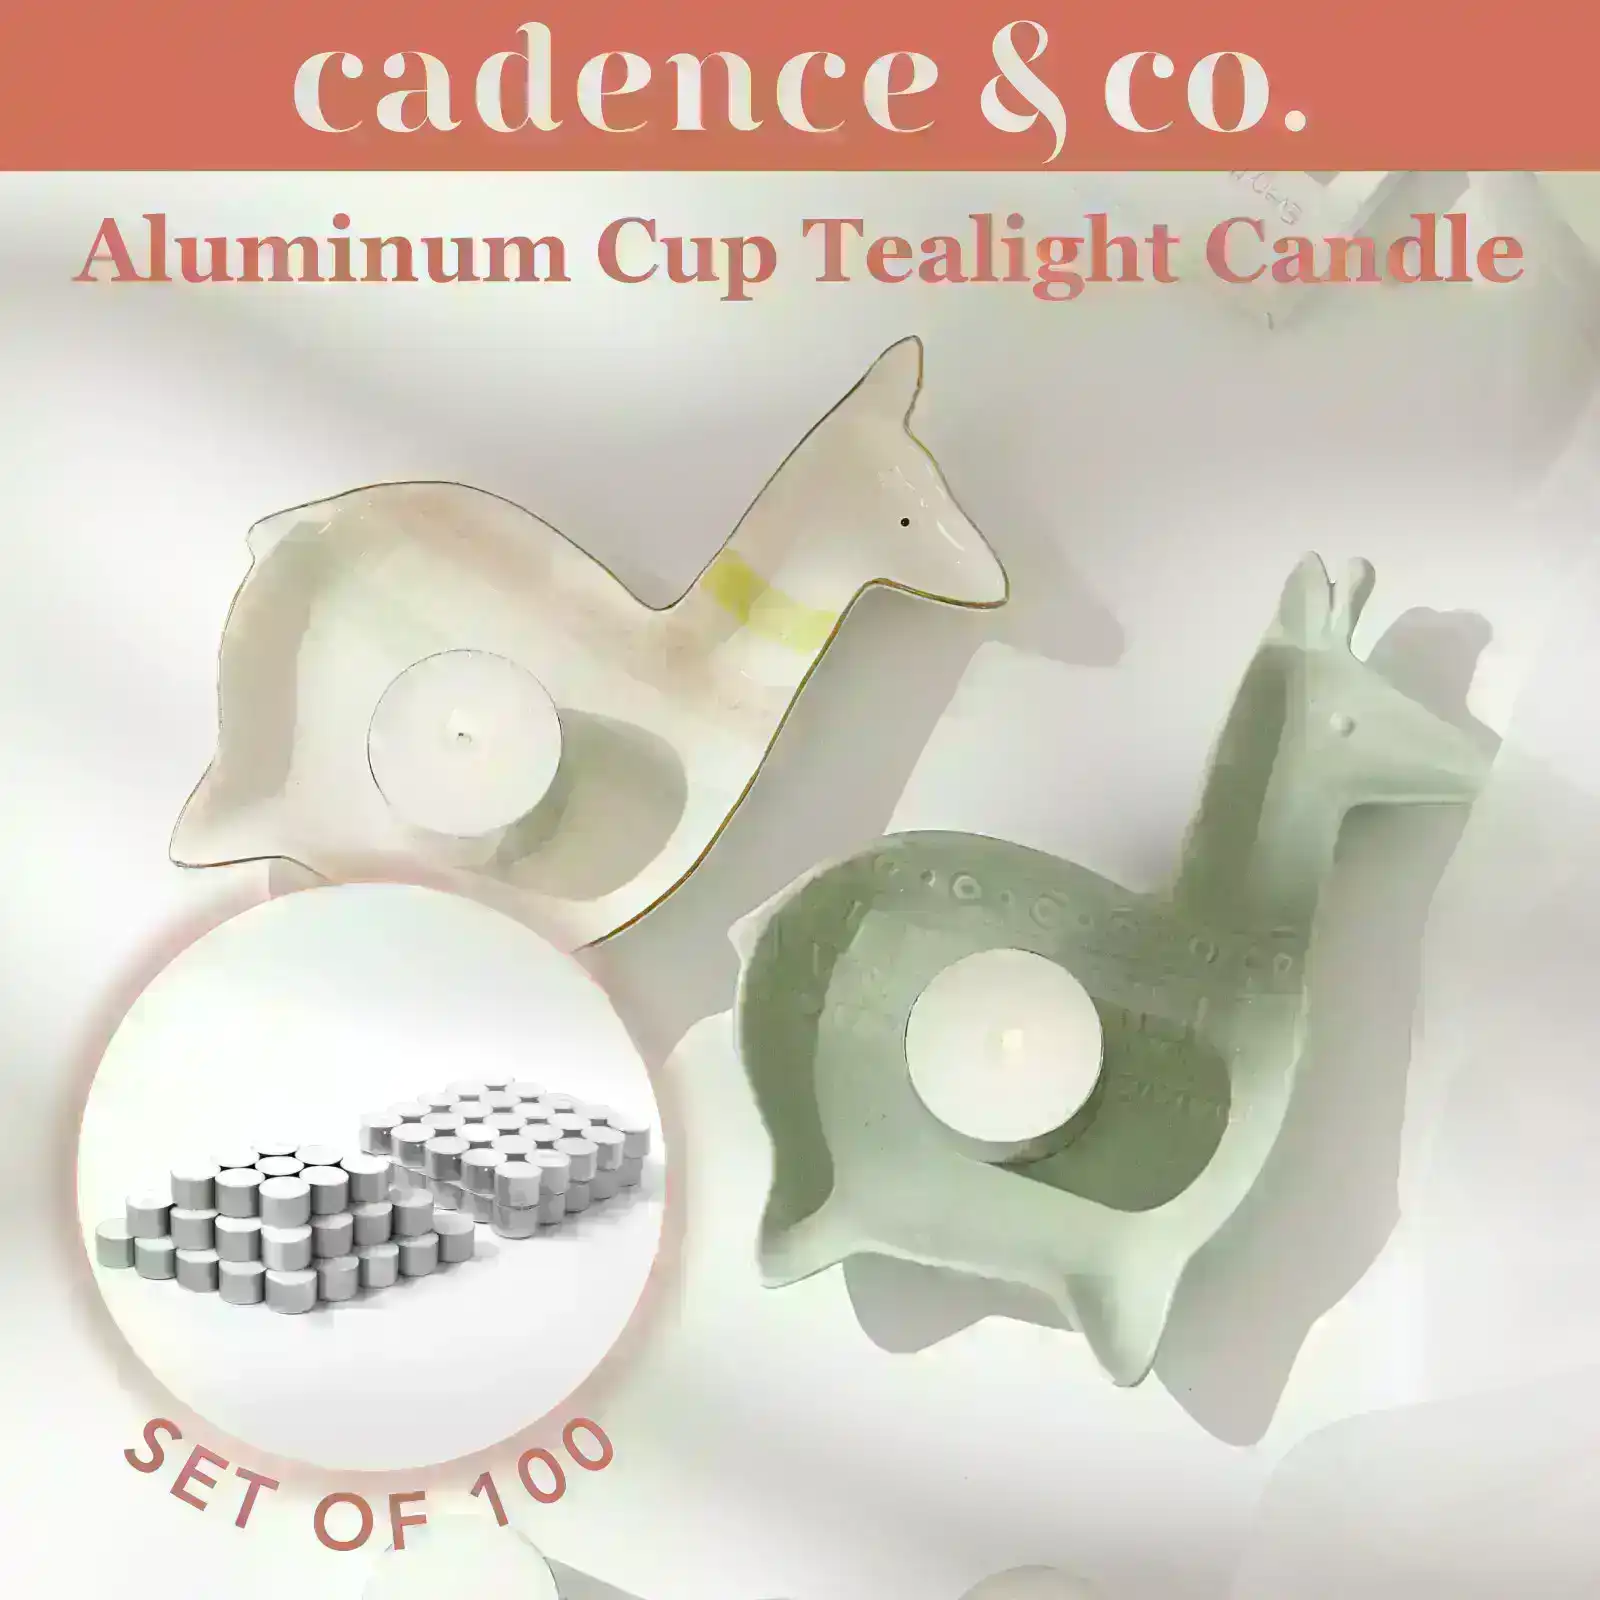 Cadence & Co Aluminum Cup Tealight Candle Set 100